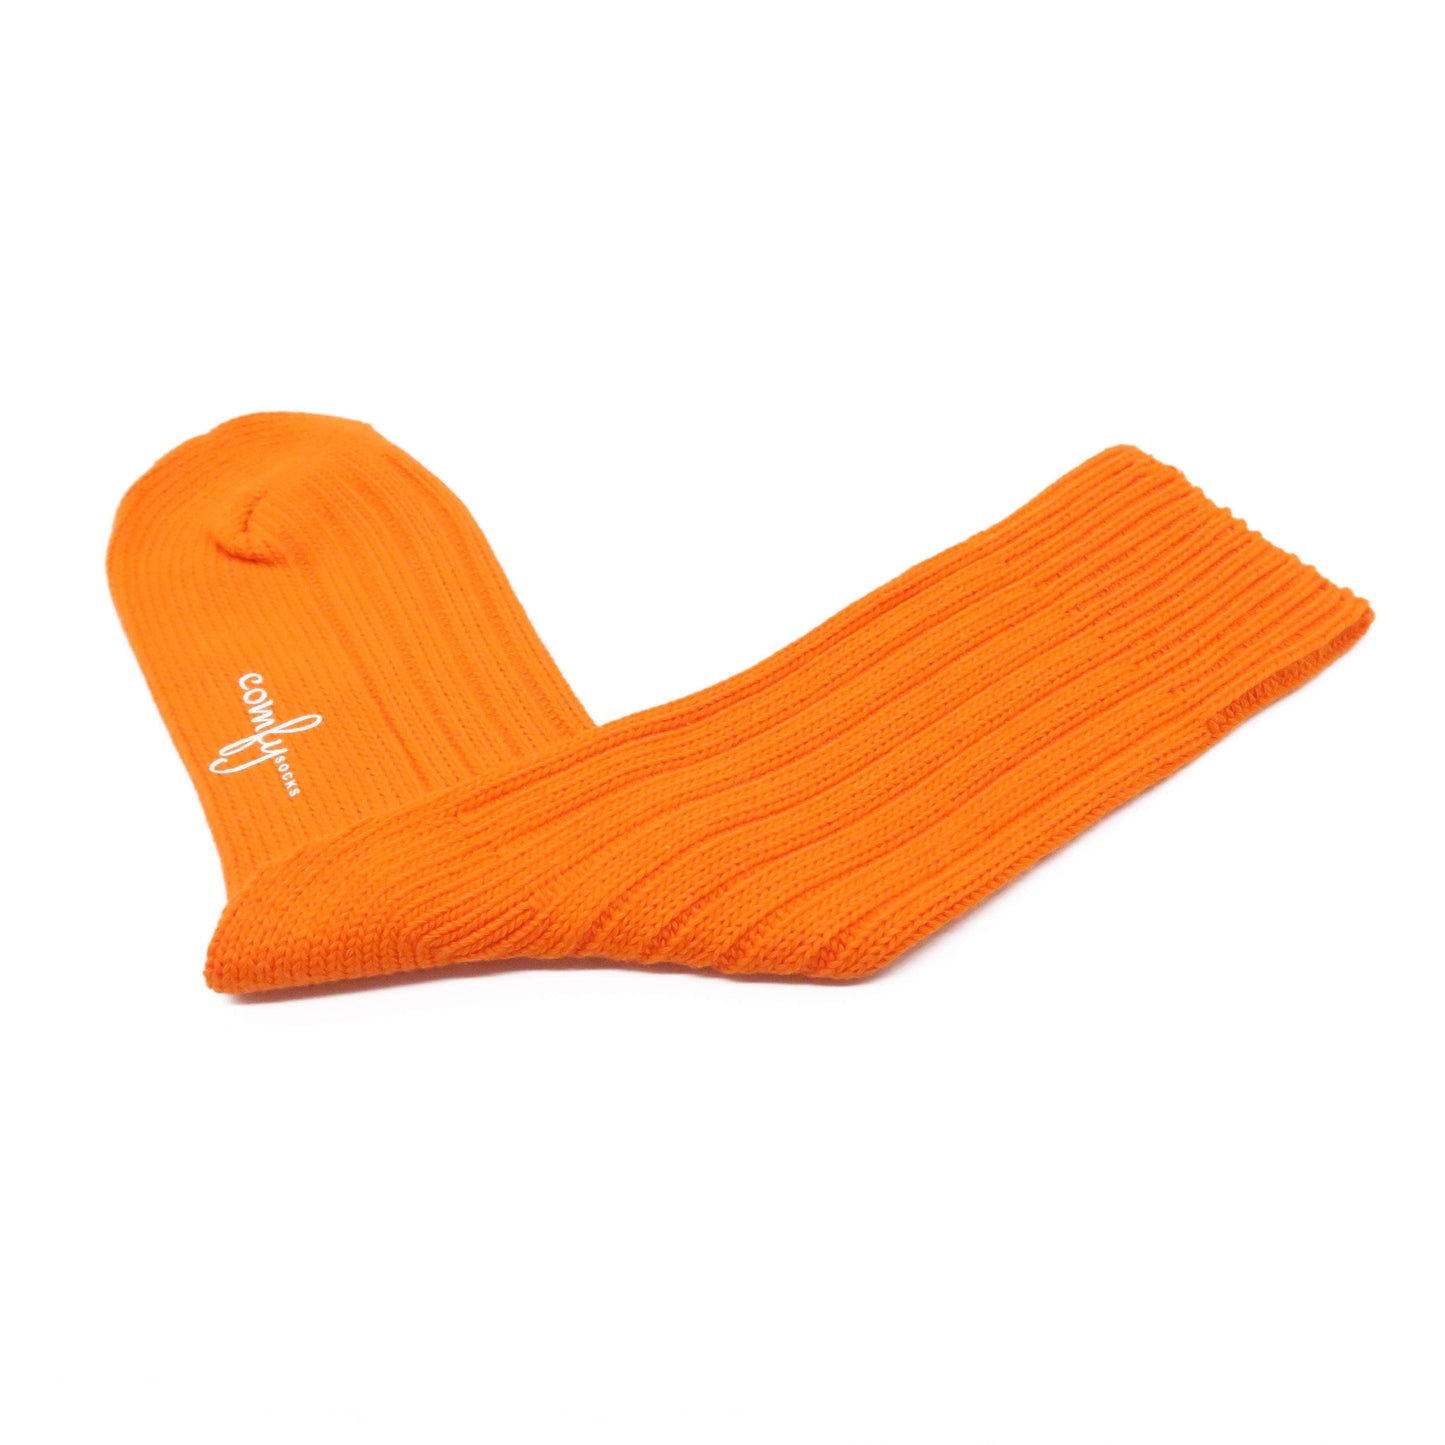 Alfred knitted neon orange socks - Comfysocks